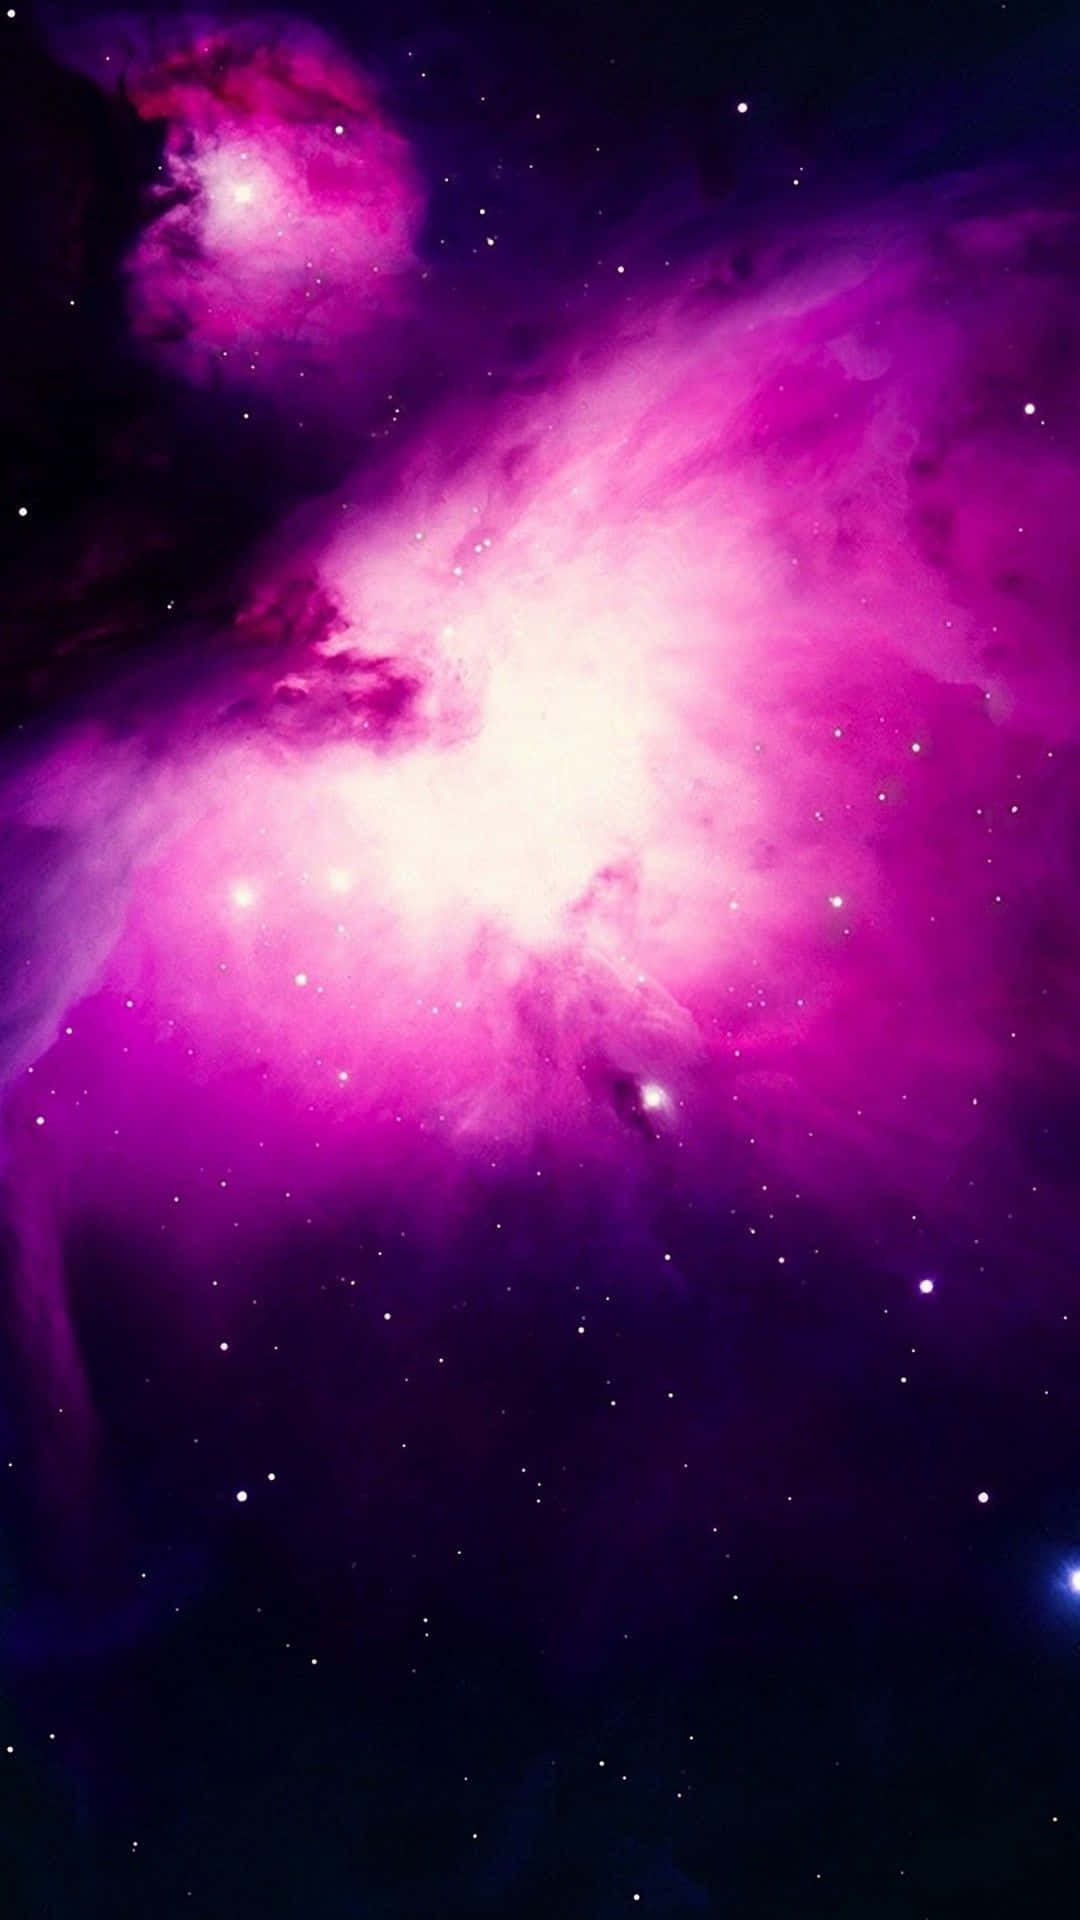 Free Pink And Purple Galaxy Wallpaper Downloads, [100+] Pink And Purple  Galaxy Wallpapers for FREE 